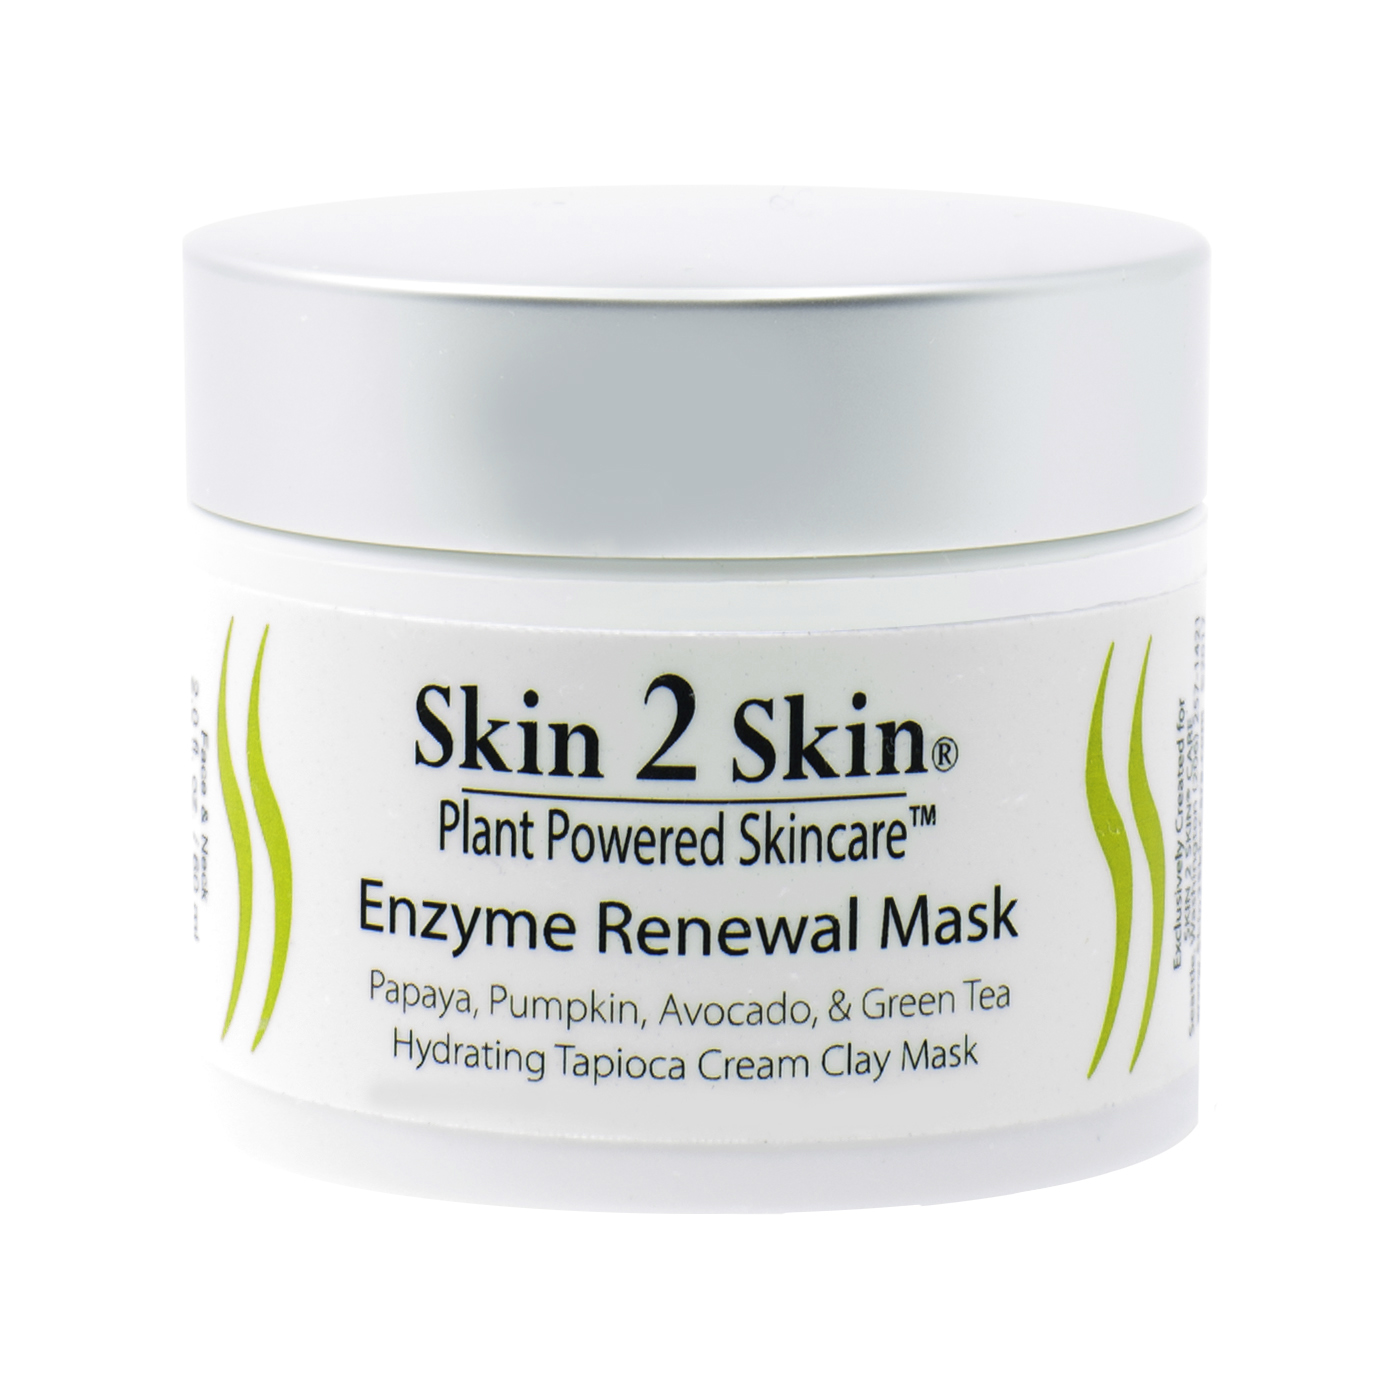 Skin 2 Skin Enzyme Renewal Mask, hydrating tapioca cream clay mask with Papaya, Pumpkin Seed, Avocado, and Green Tea 